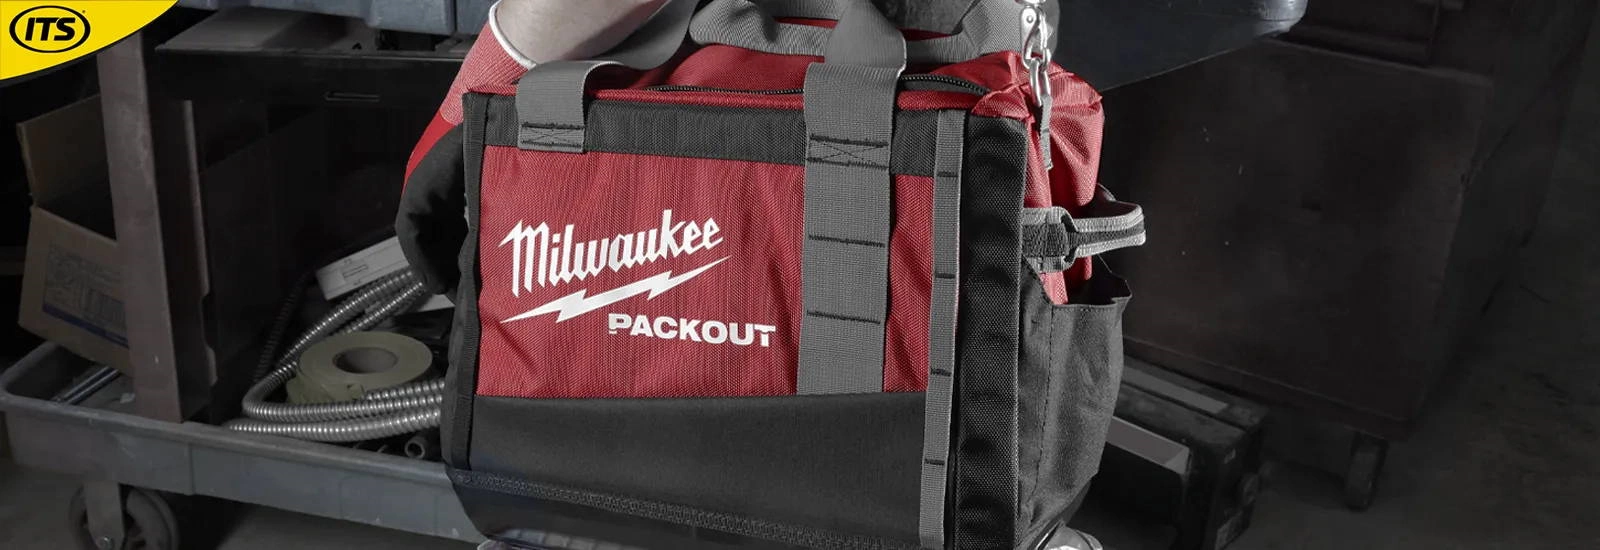 Milwaukee Packout Soft Storage